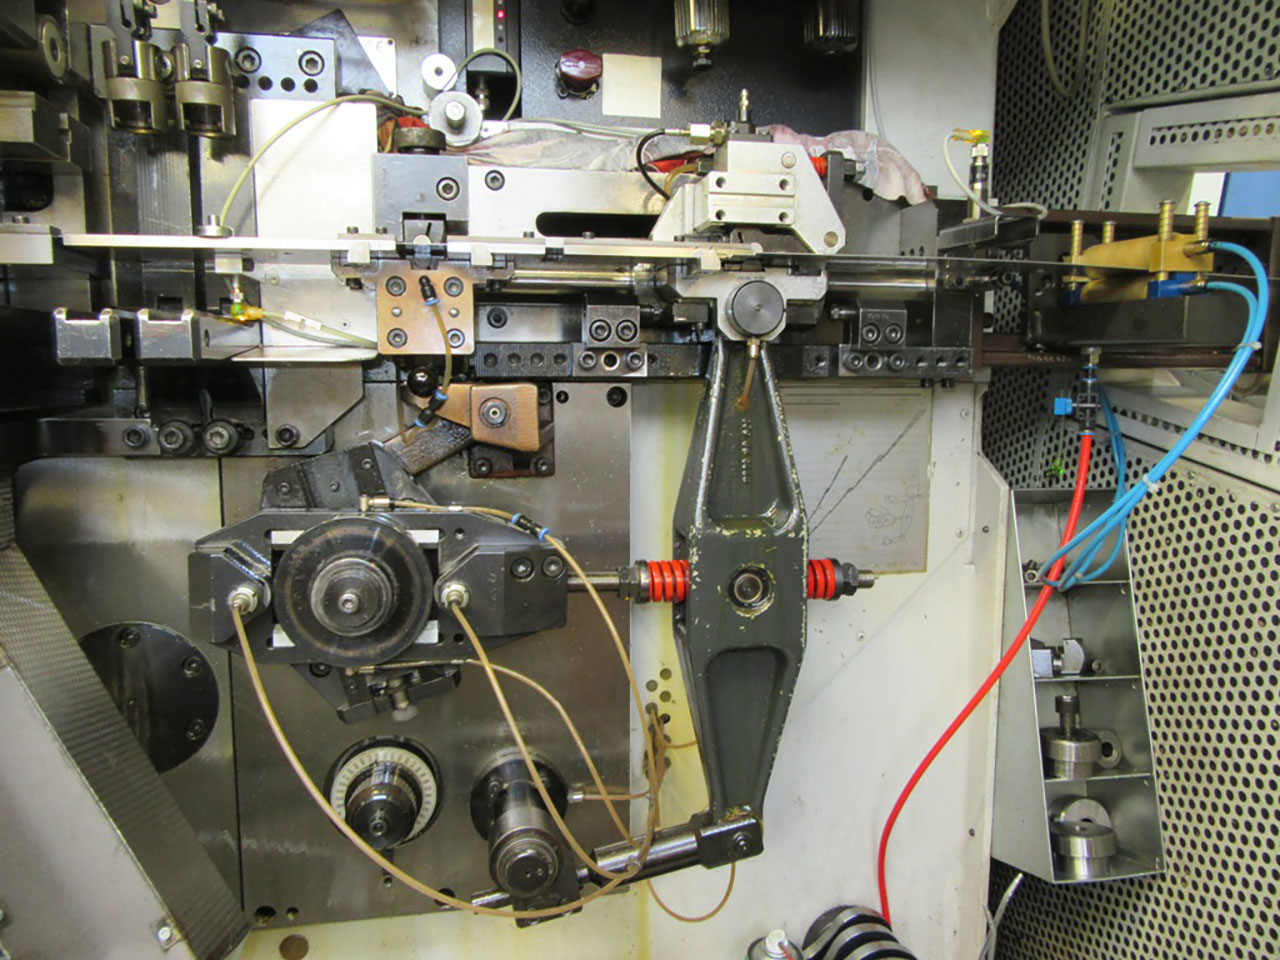 Bihler GRM 80 stamping and forming machine PR2468, used